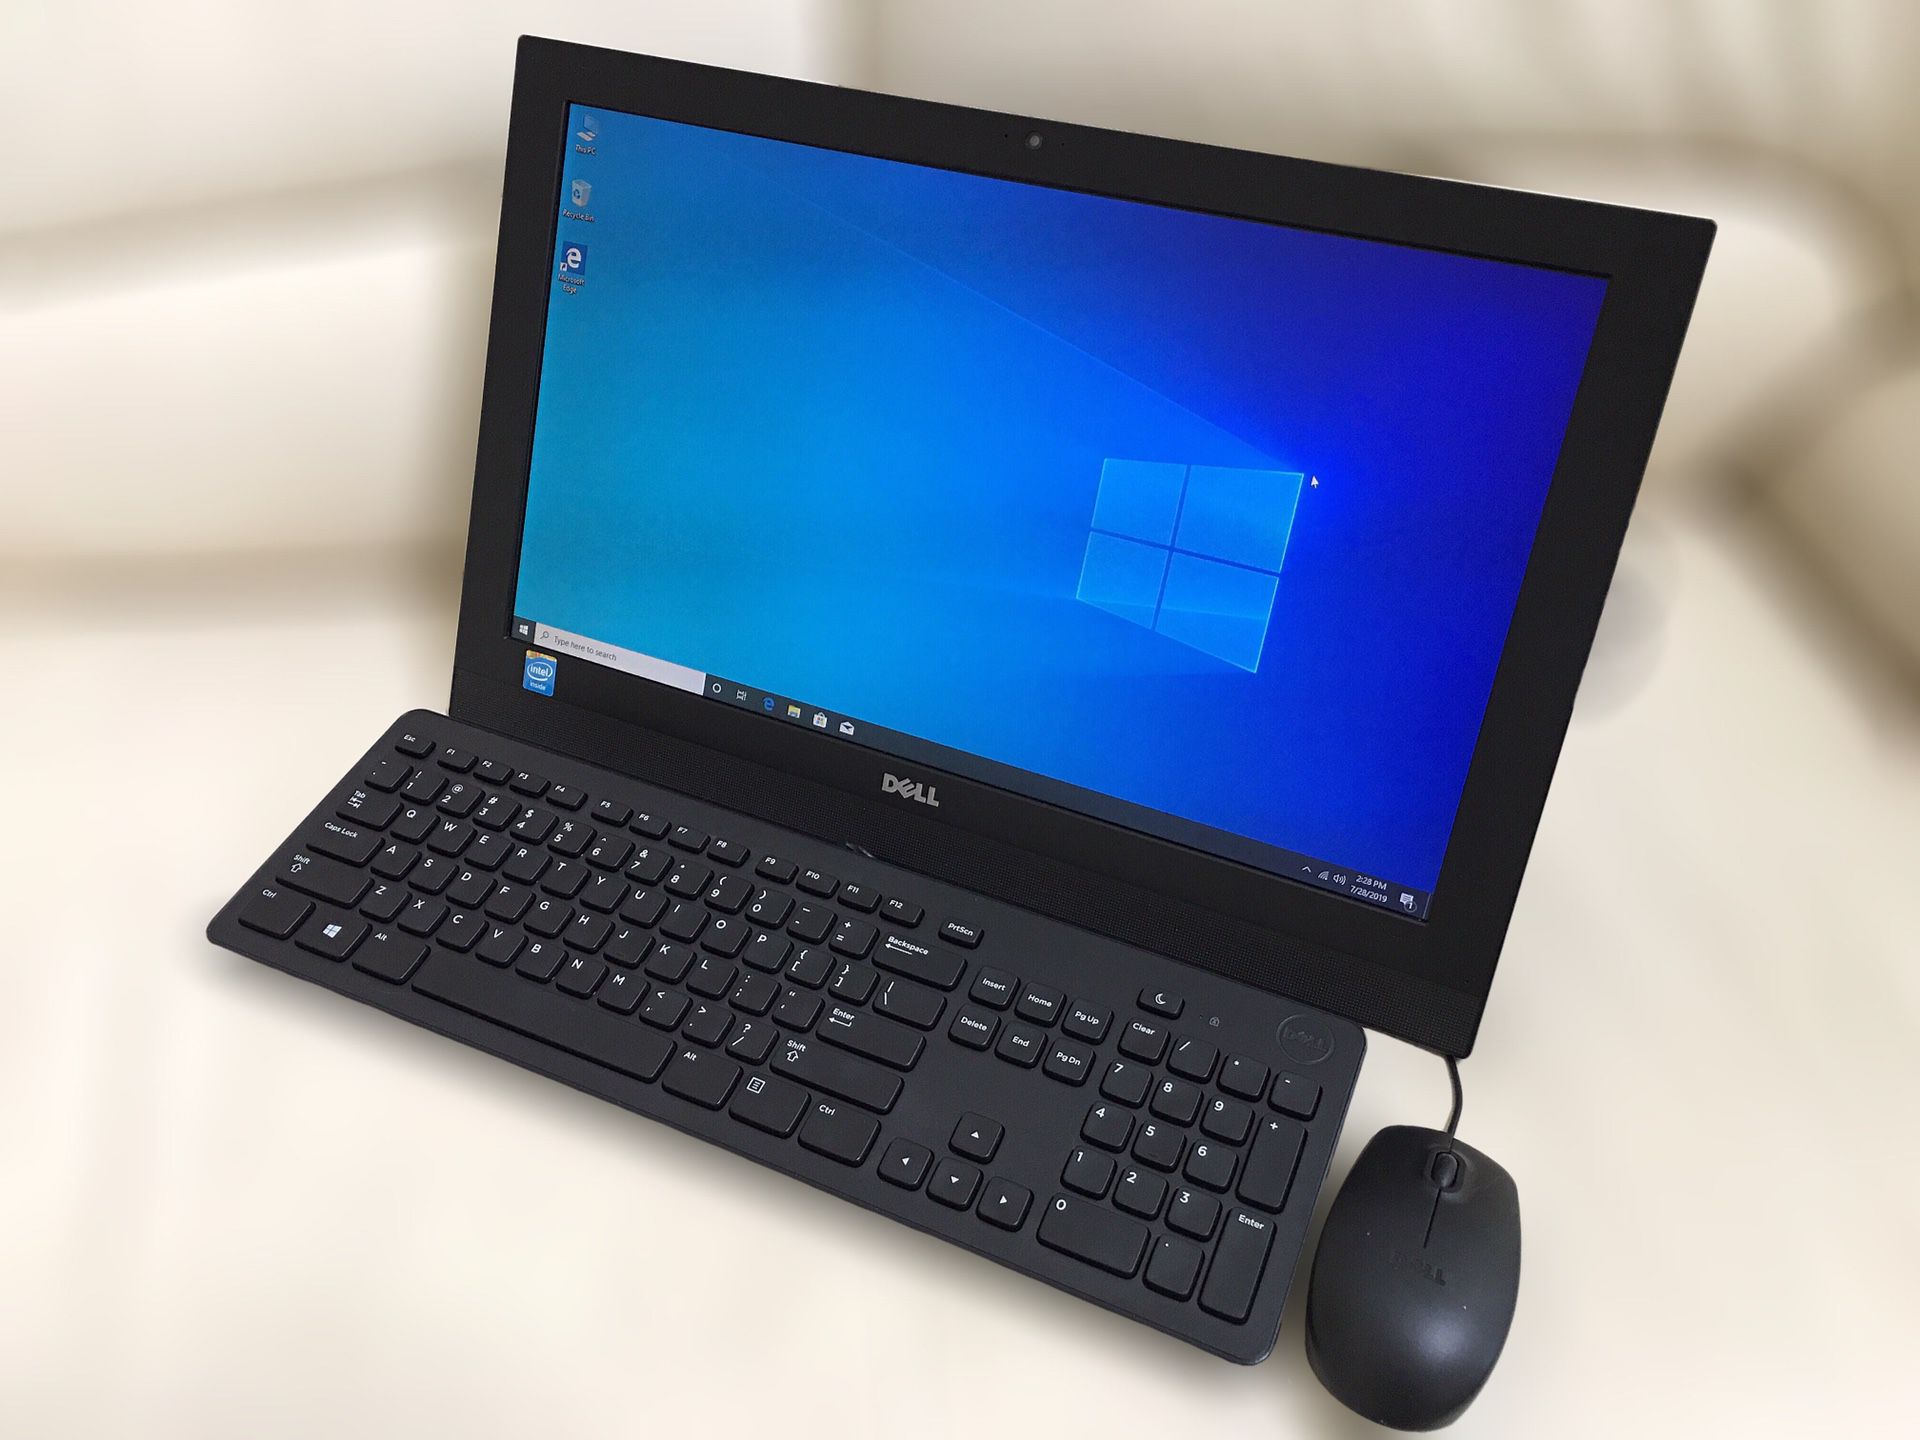 Dell All-in-one desktop / Windows 10 / Antivirus / Keyboard / Mouse